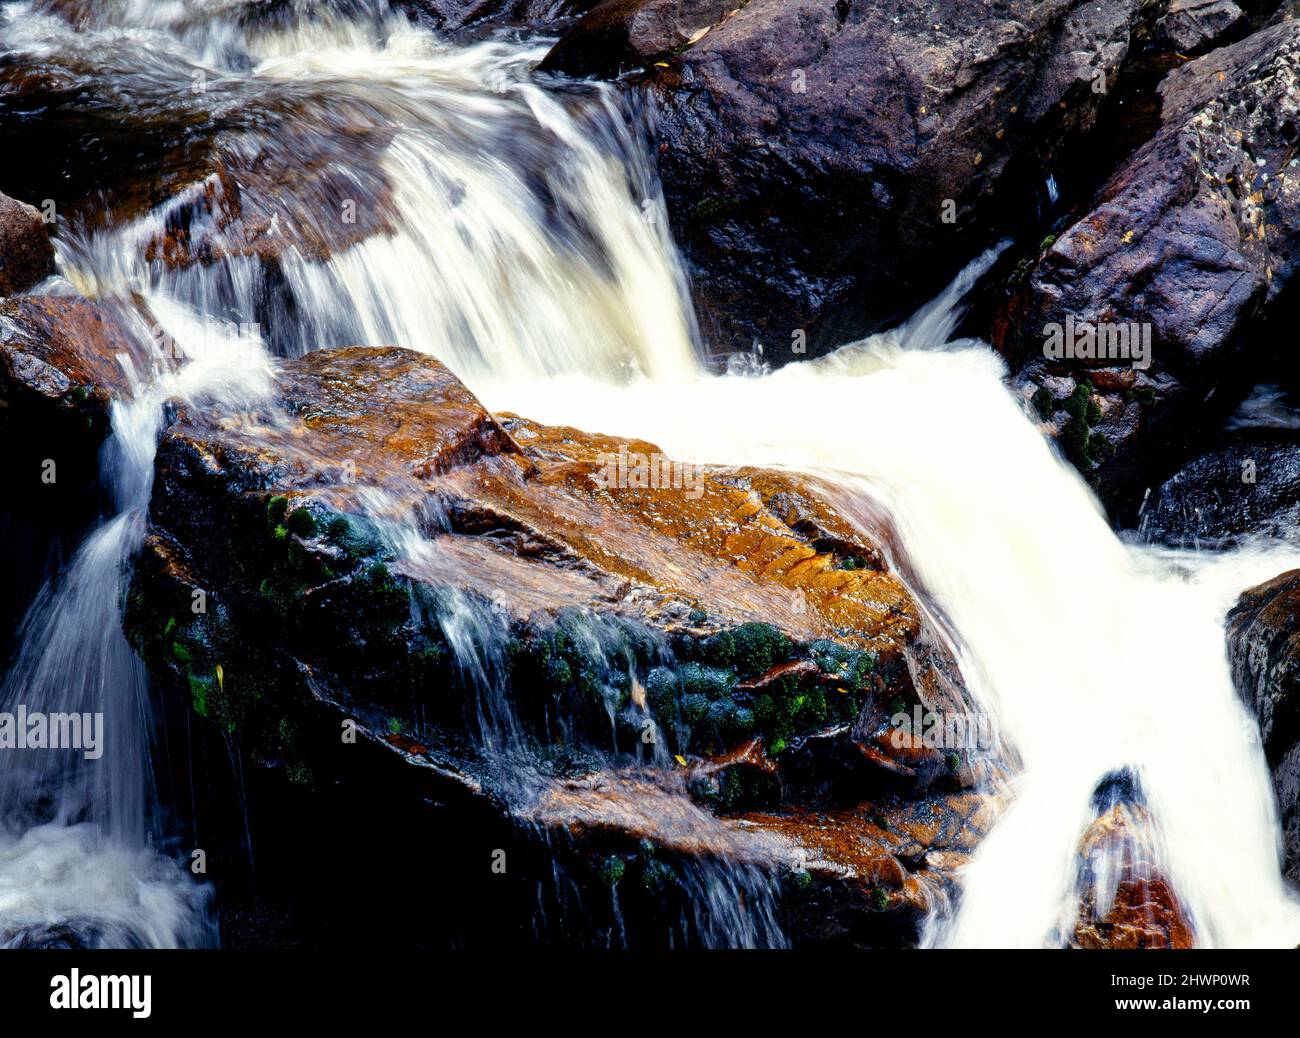 Aguas rápidas sobre rocas, Tasmania, Australia Foto de stock